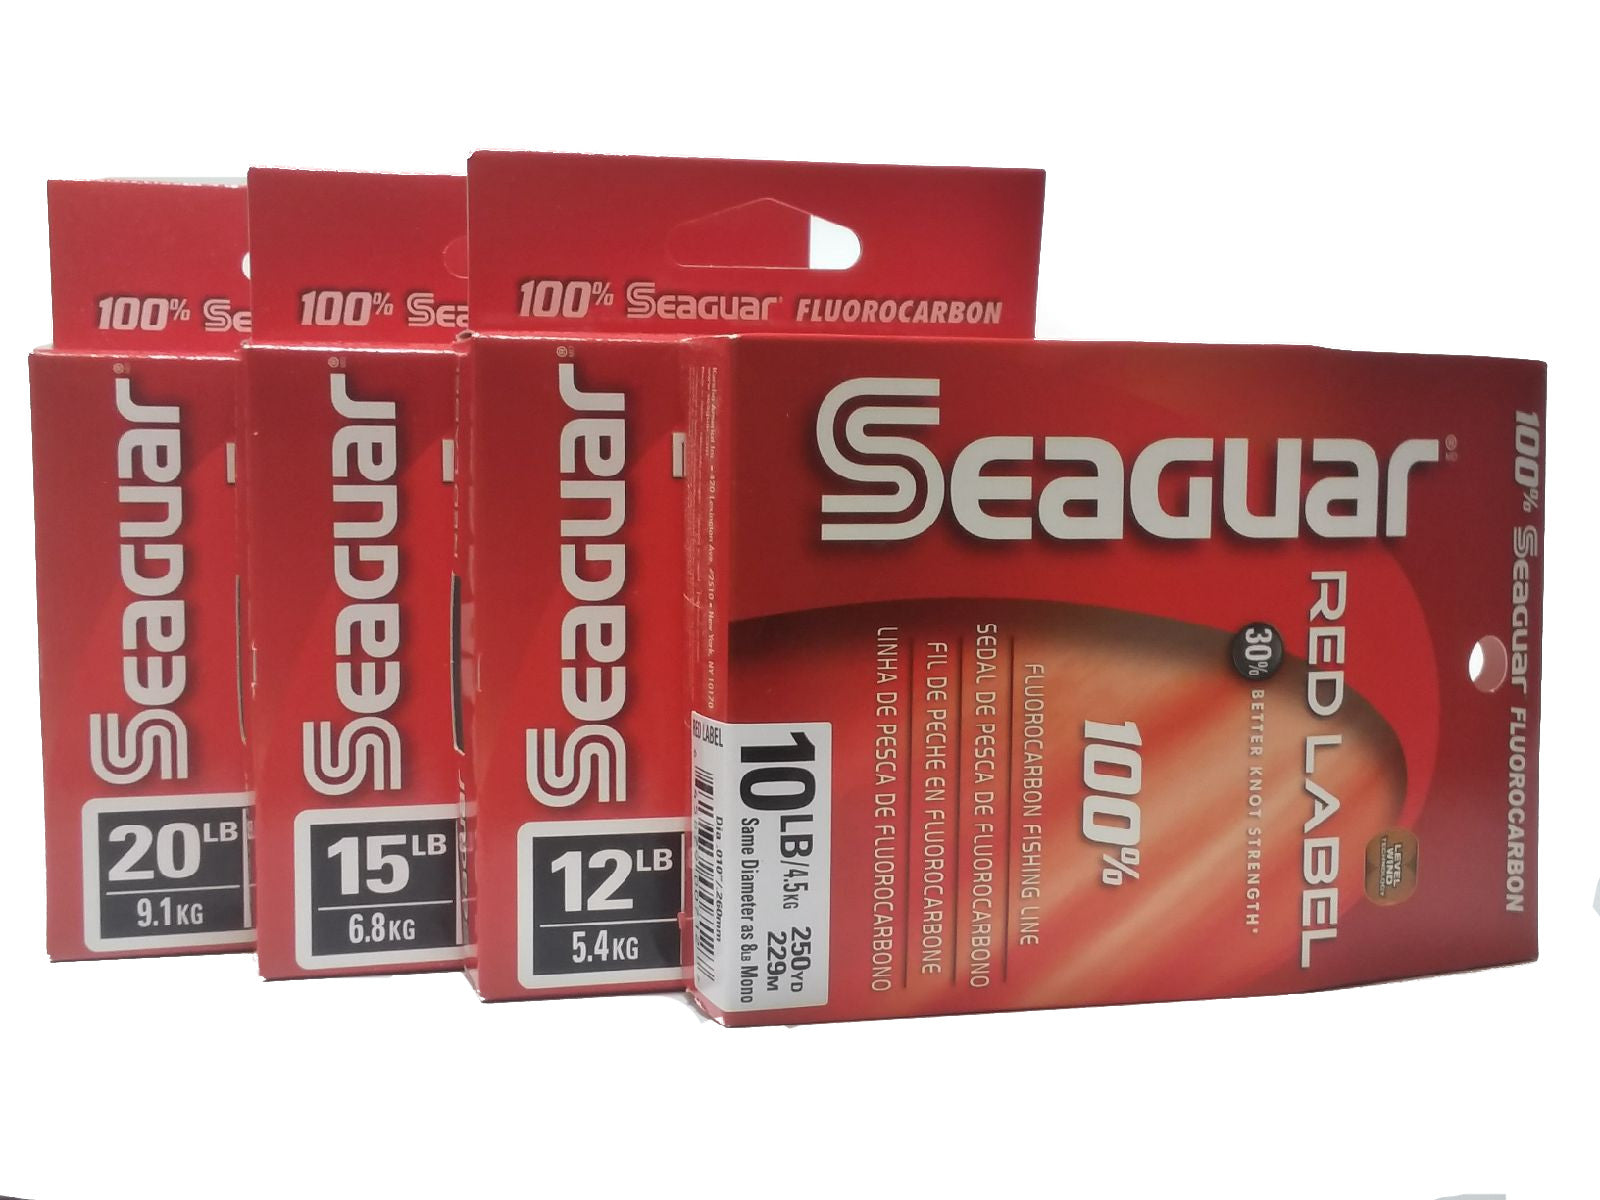 Fluorocarbono Seaguar Red Label